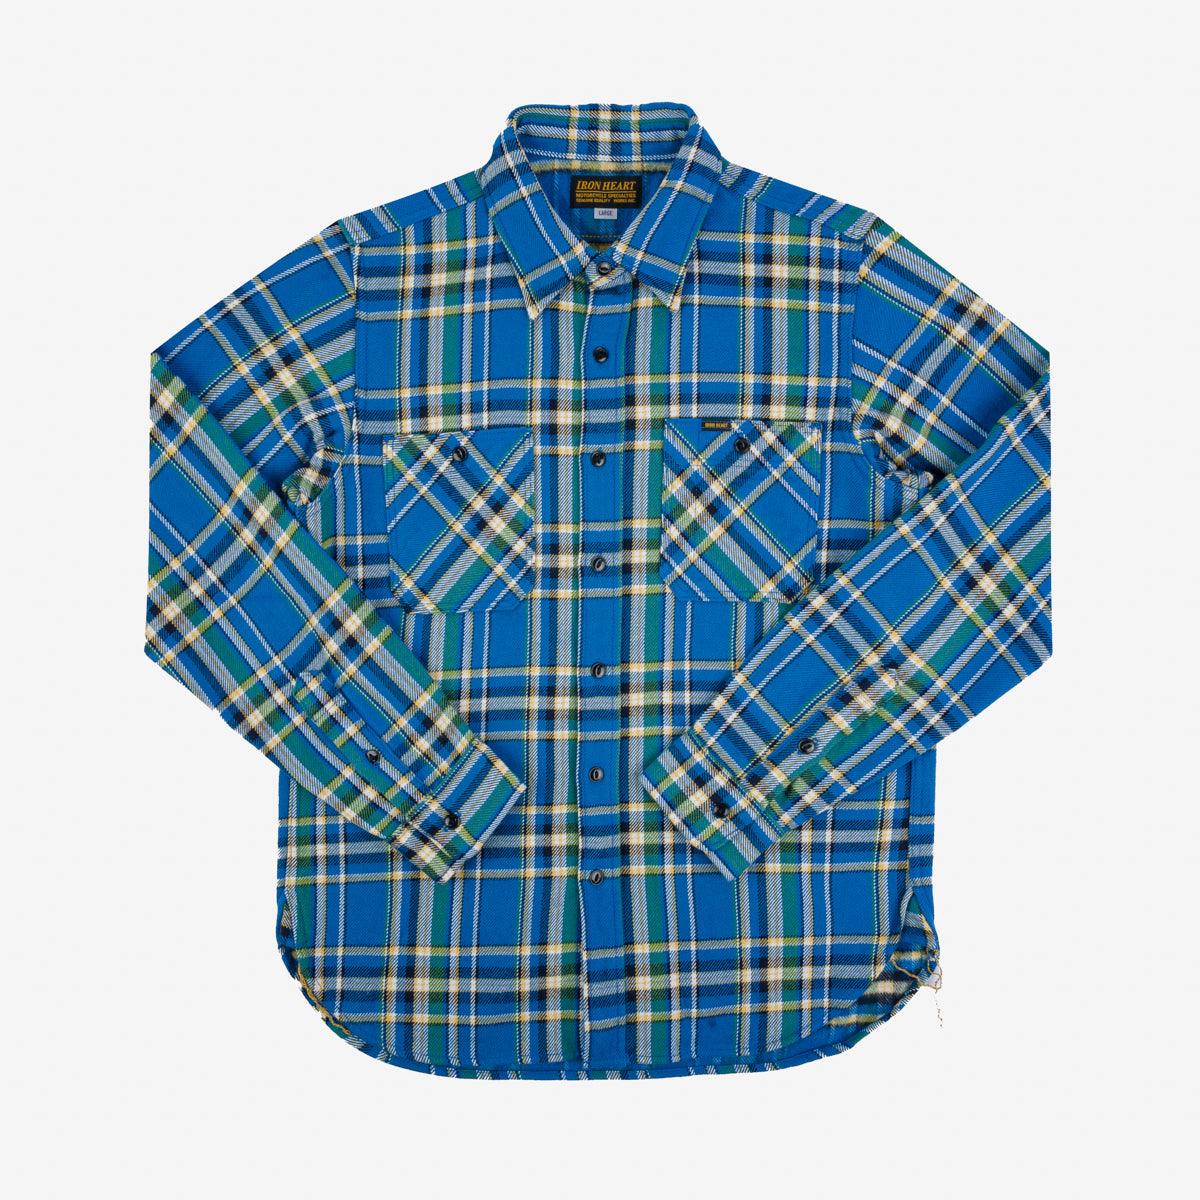 IHSH-376-BLU - Ultra Heavy Flannel TartanCheck Work Shirt - Blue